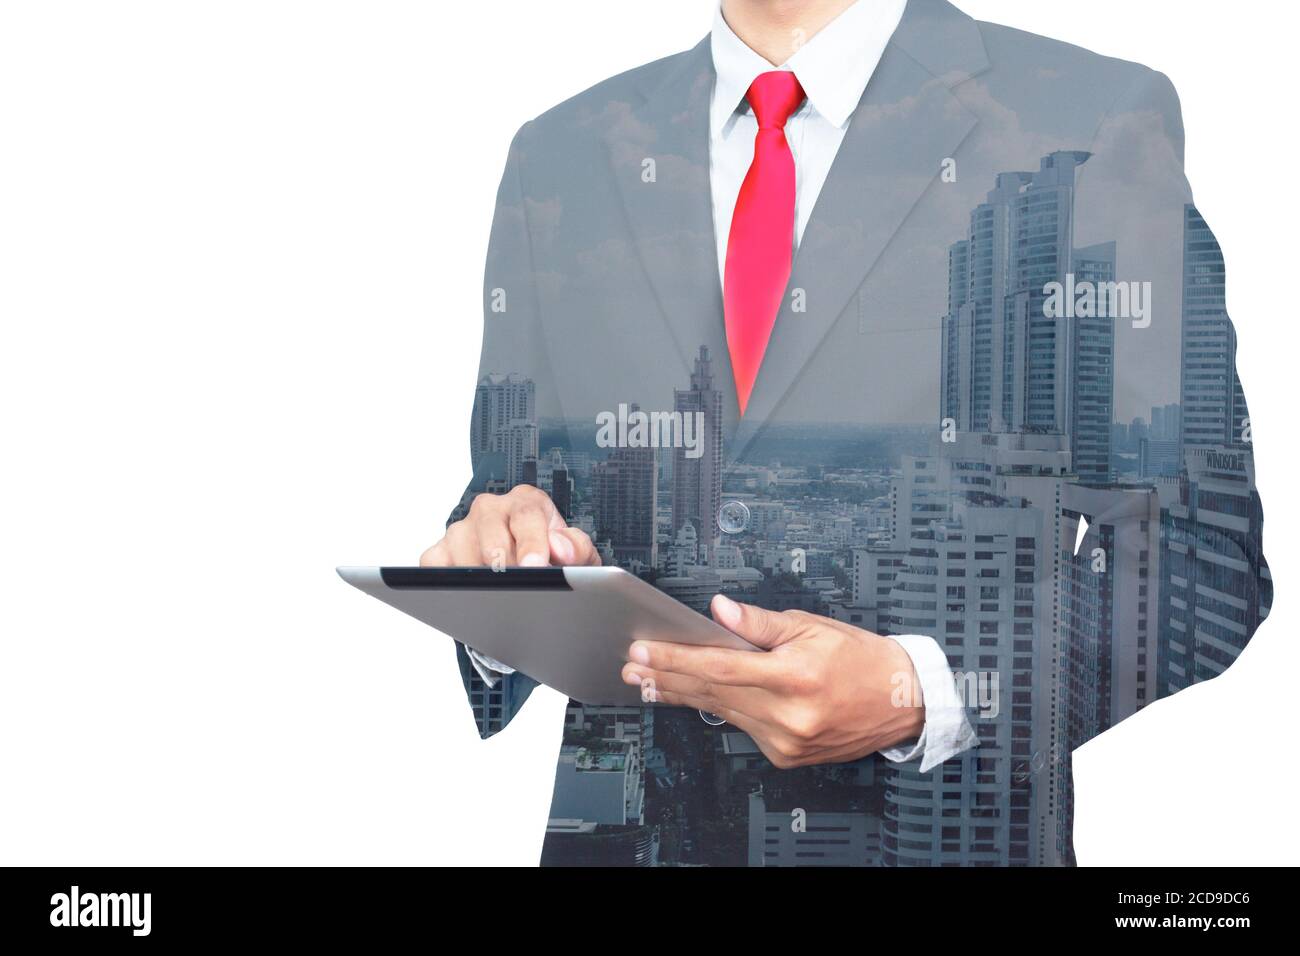 Doppelbelichtung Foto. Business man berührt modernes Tablet. Investment Trader Manager Working Banking Projekt, anonymes Gesicht Stockfoto